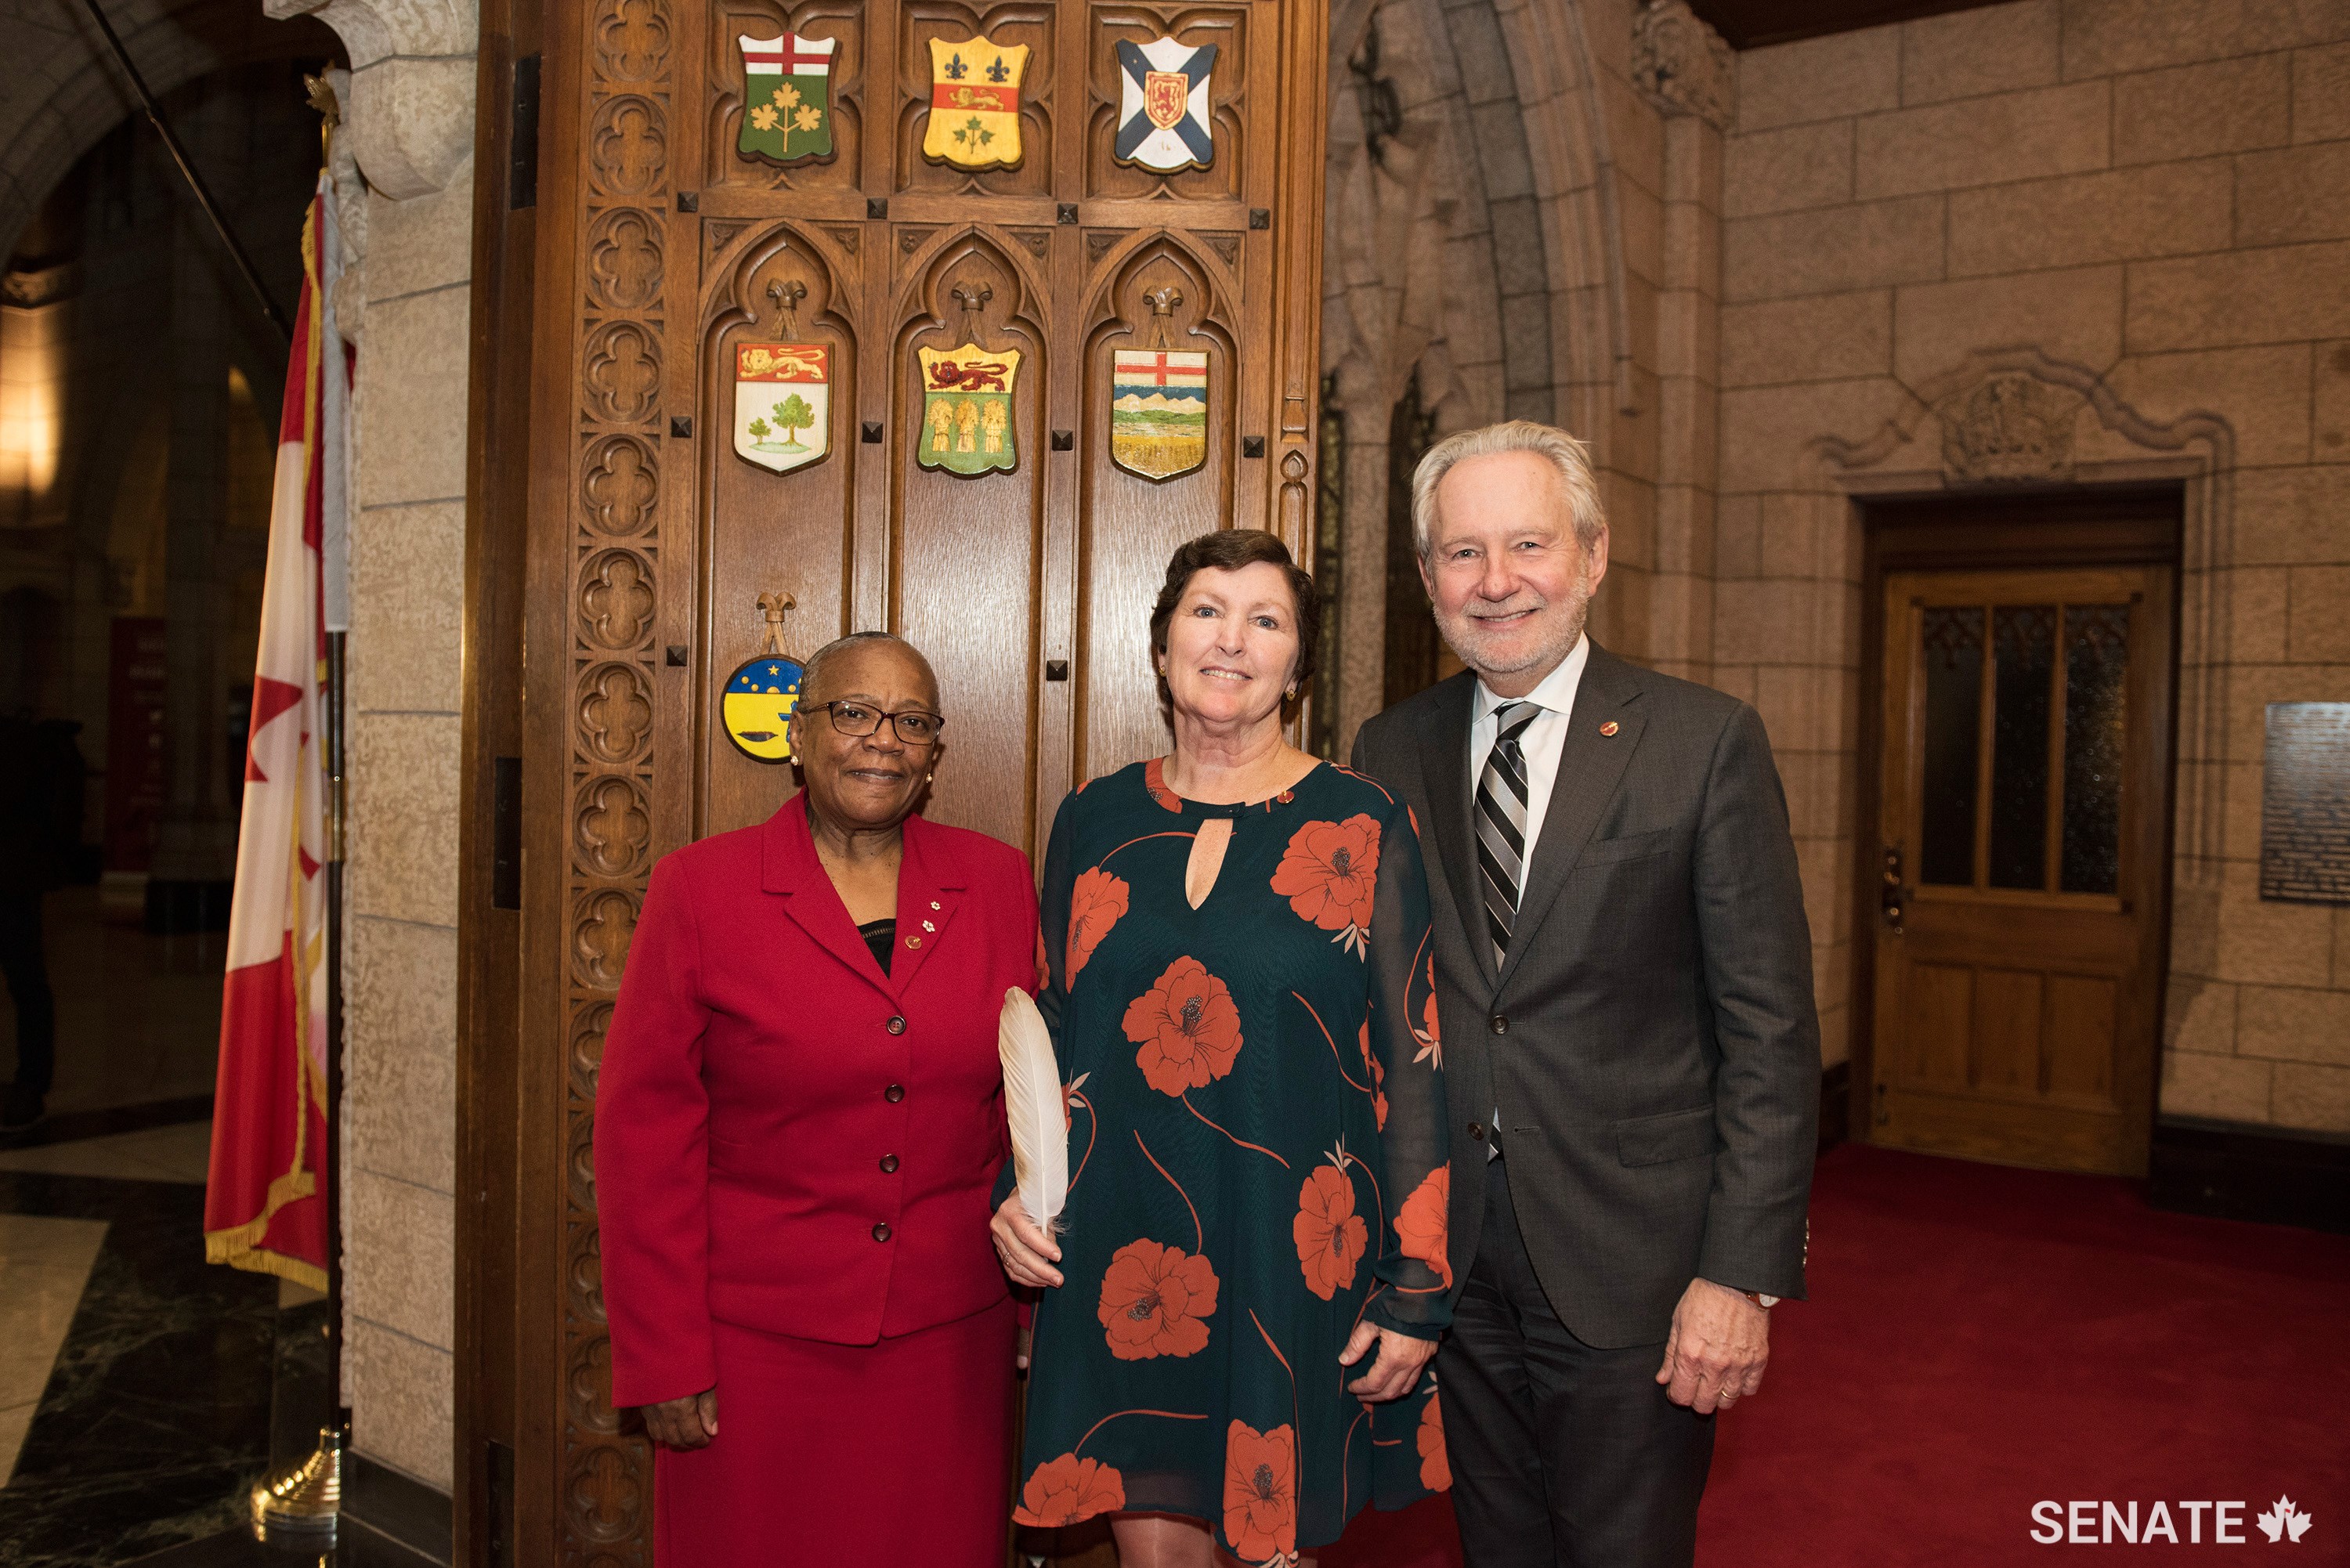 Senator Mary Coyle (centre) is welcomed to the Senate Chamber by Senator Peter Harder (right) and Senator Wanda Thomas Bernard (left)